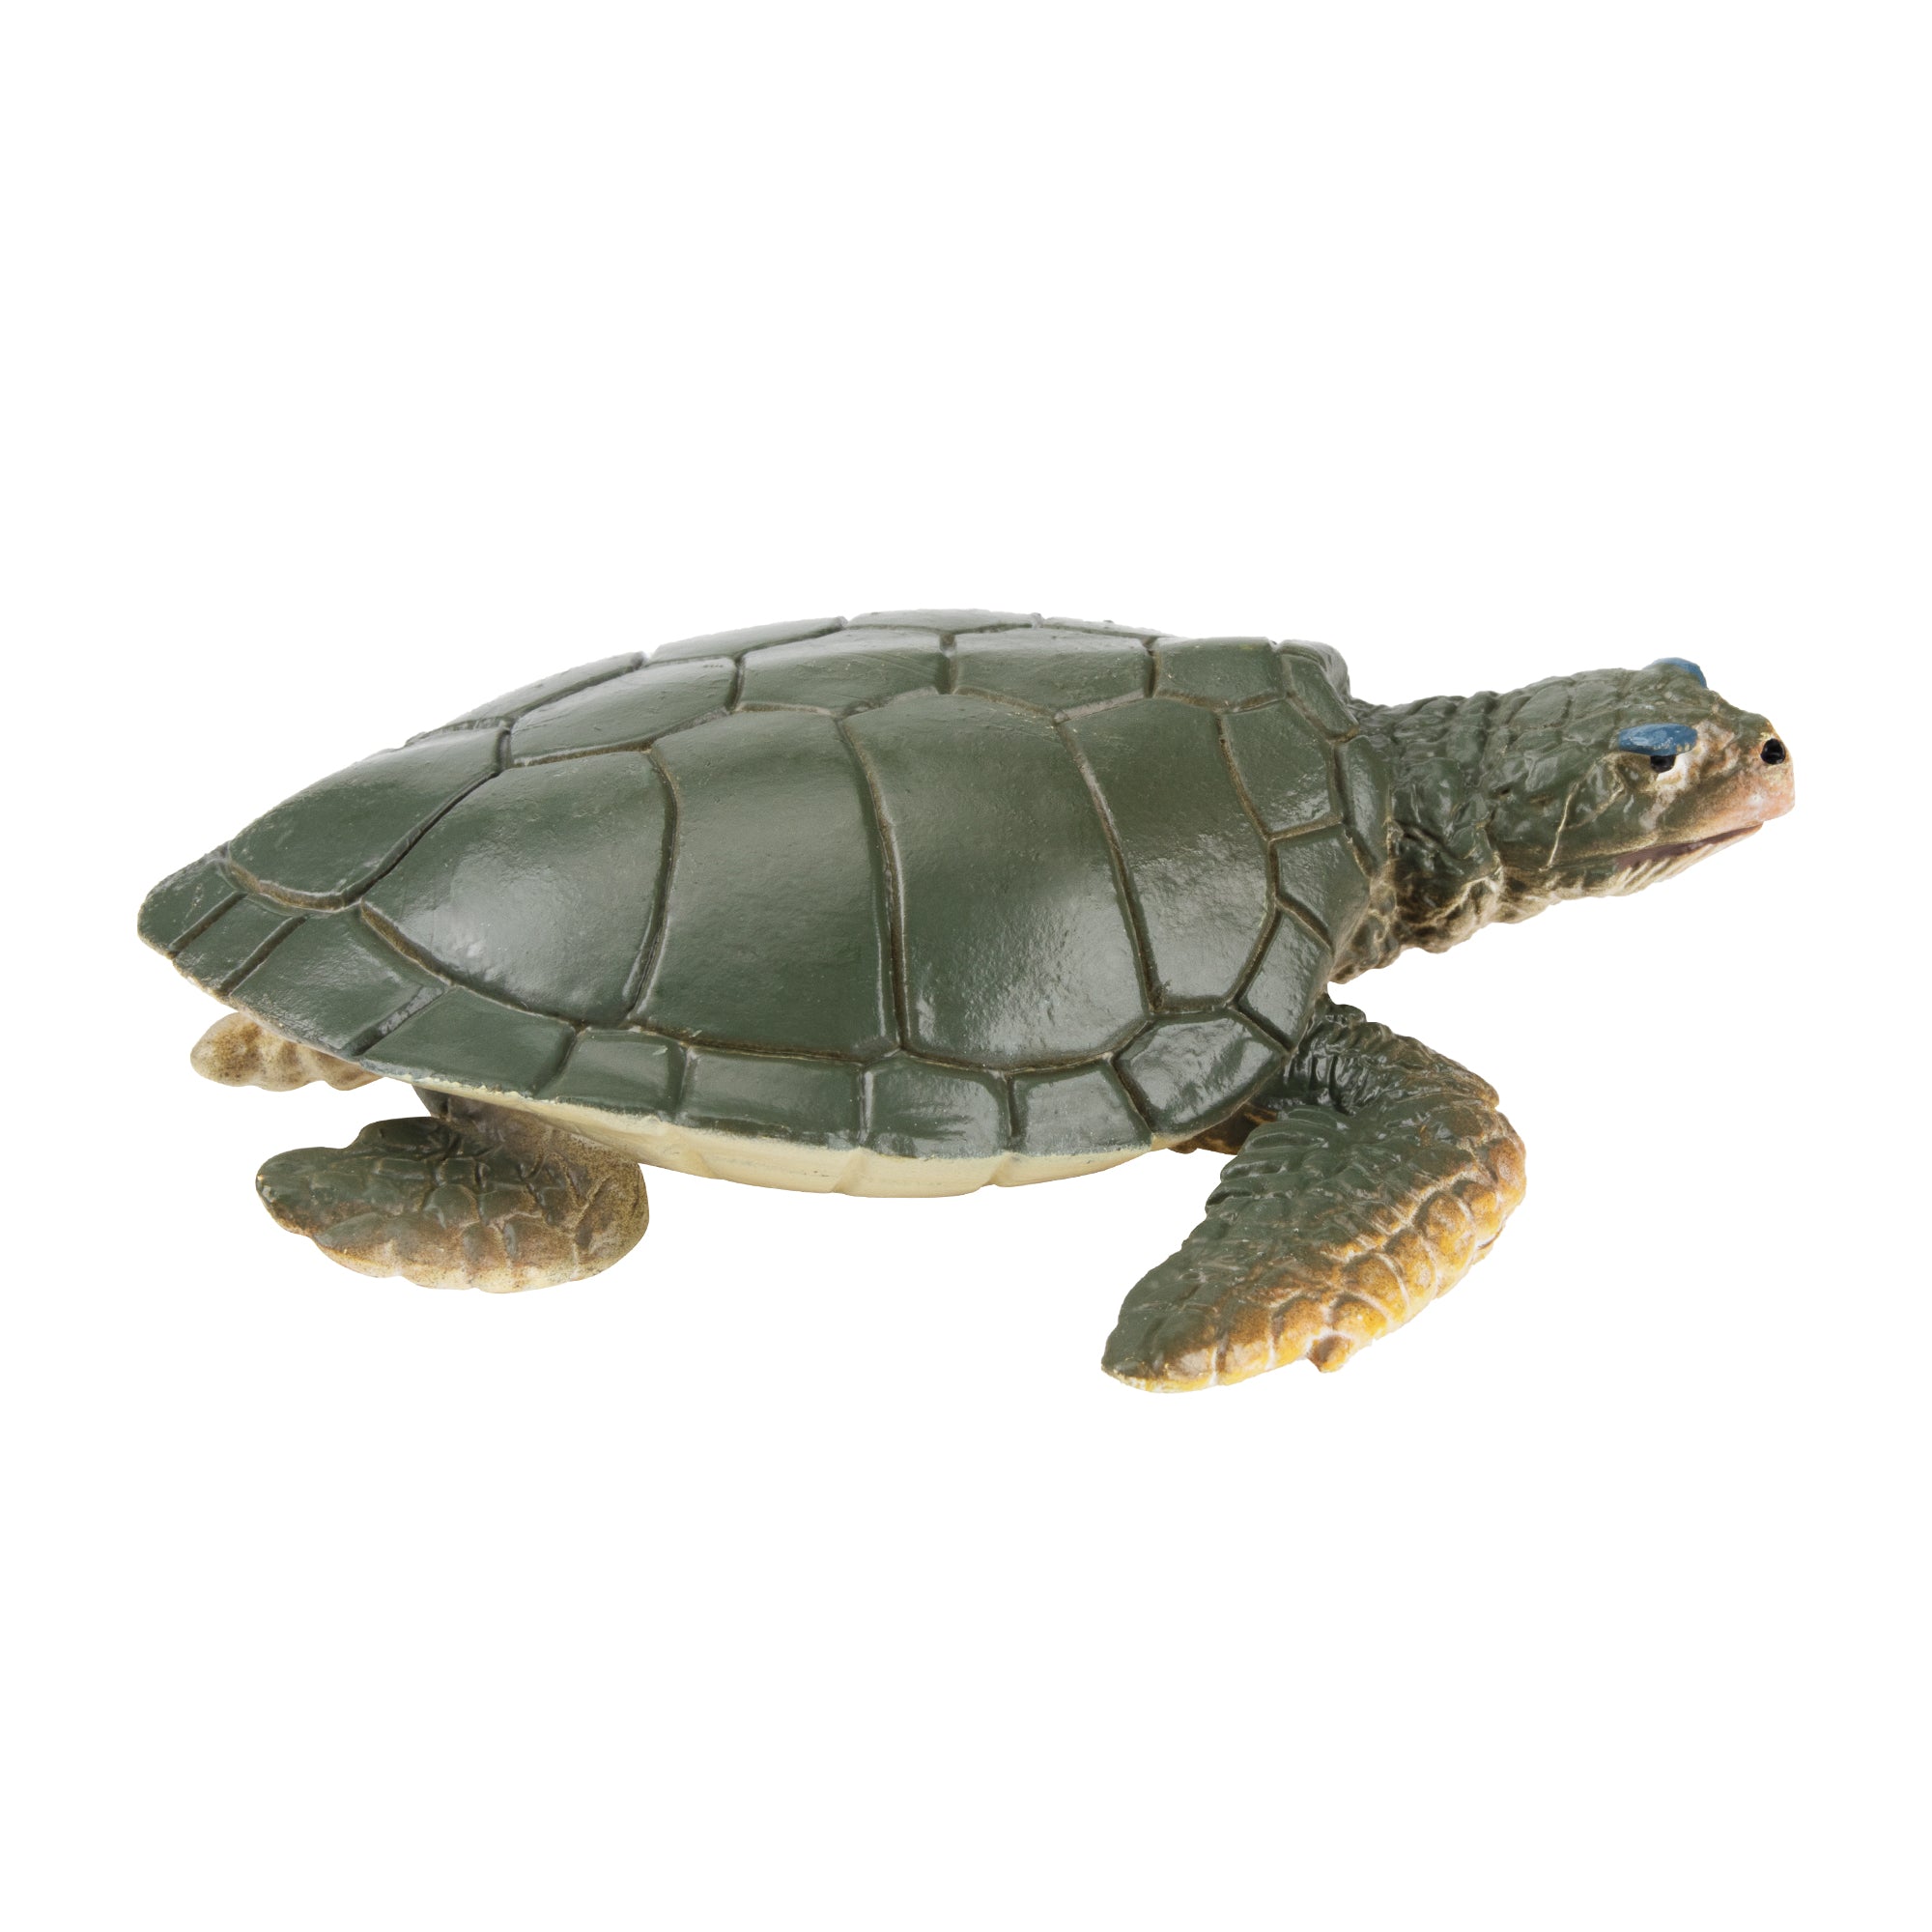 Toymany Walking Kemp's Ridley Sea Turtle Figurine Toy